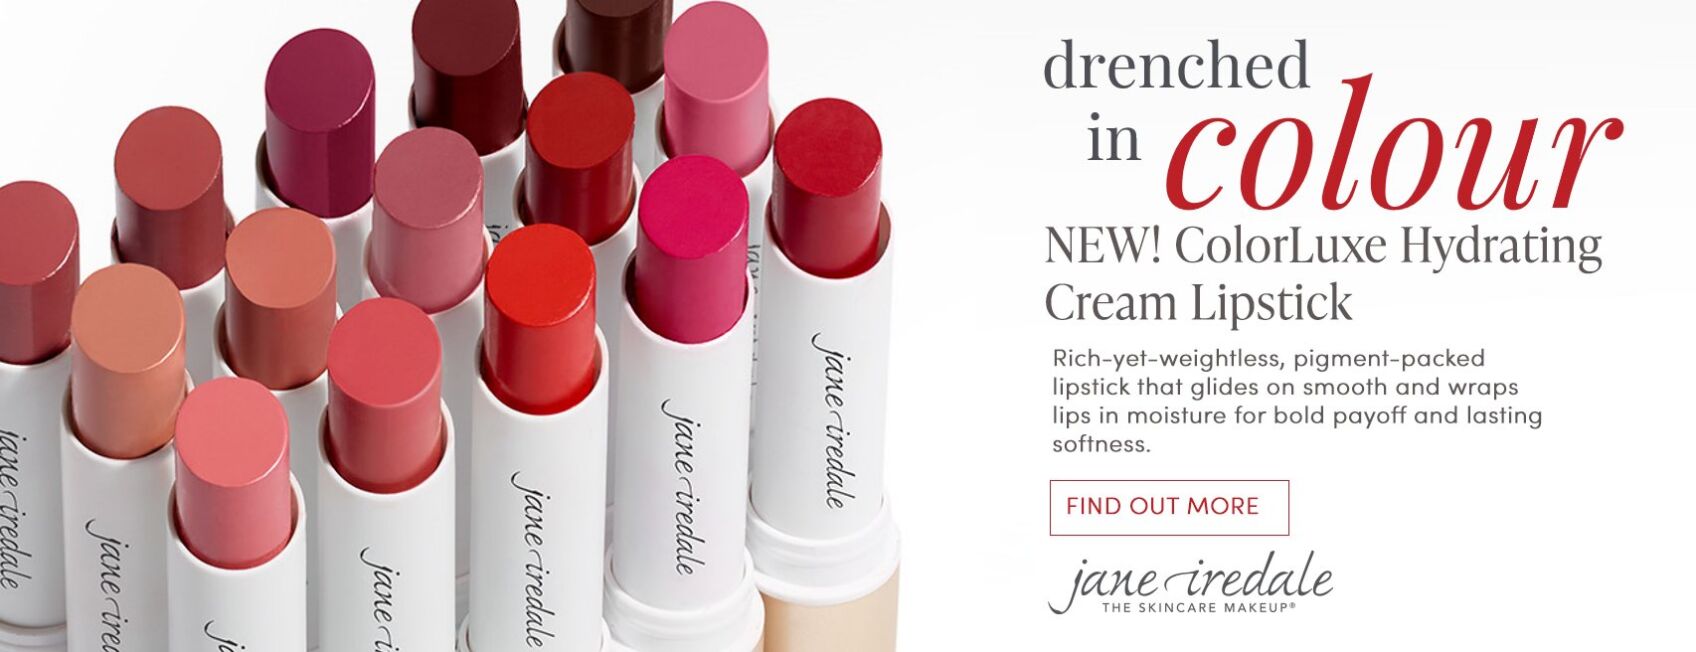 New ColorLuxe Hydrating Cream Lipstick